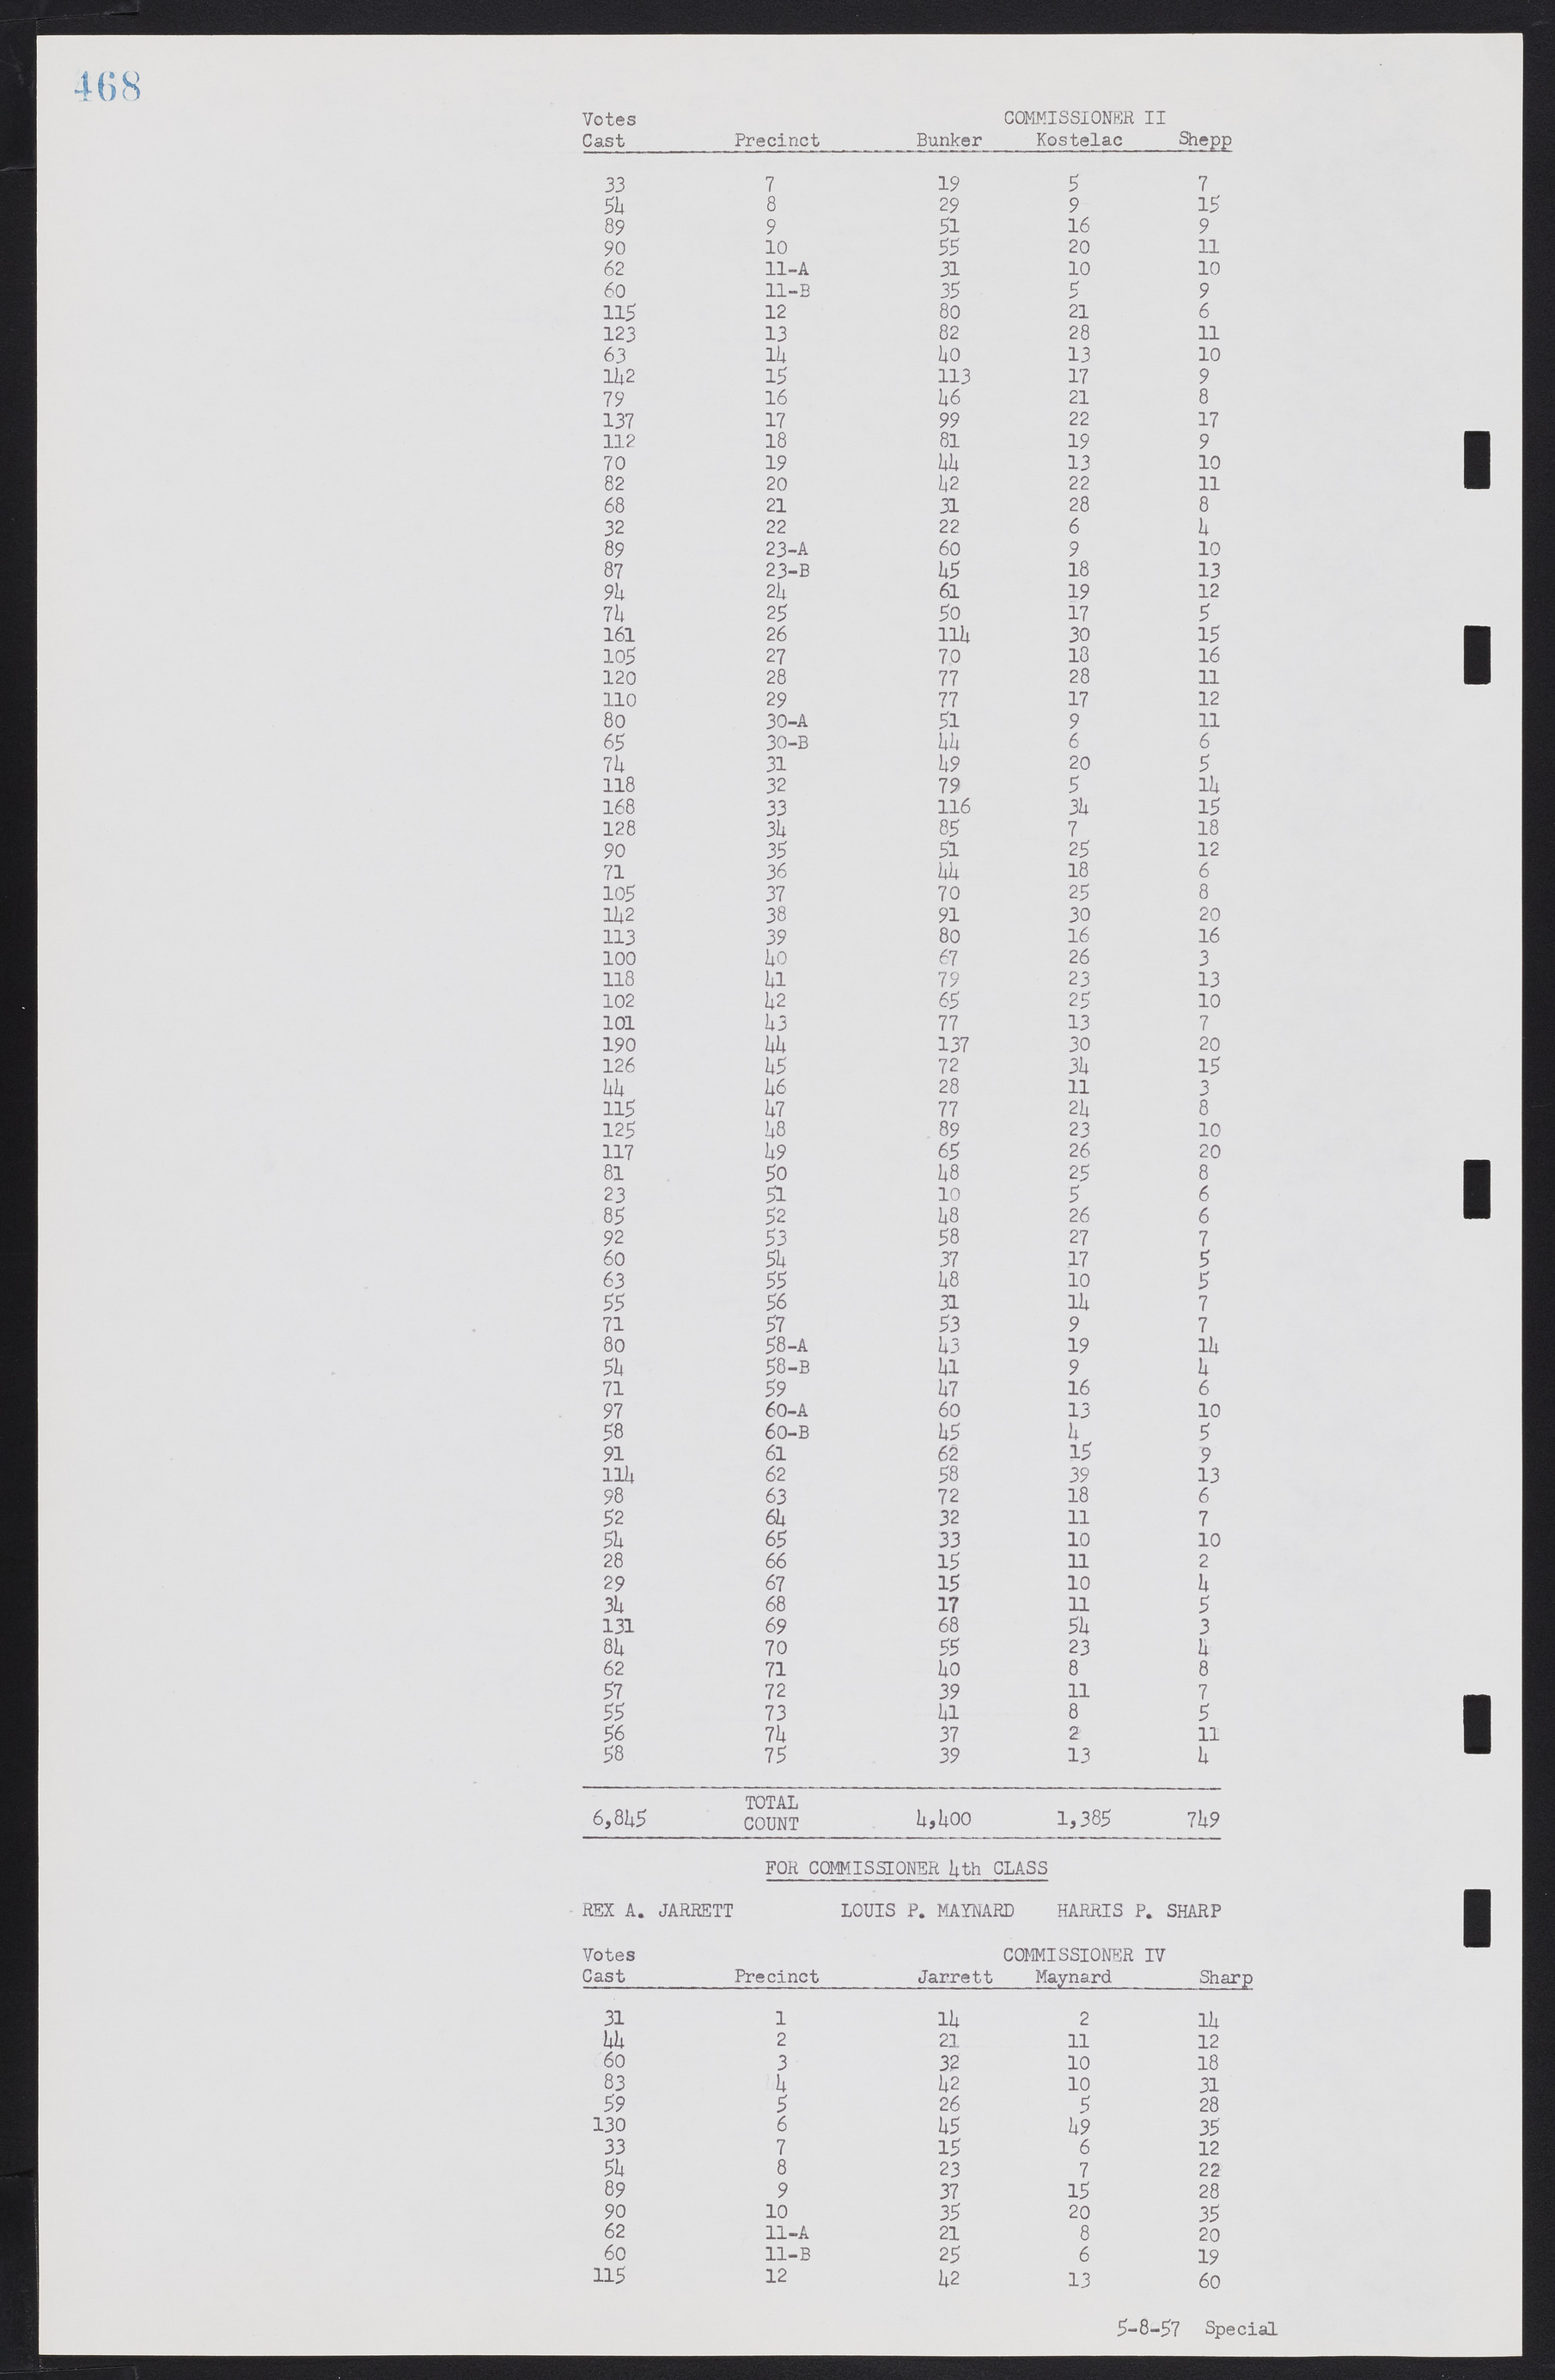 Las Vegas City Commission Minutes, September 21, 1955 to November 20, 1957, lvc000010-488